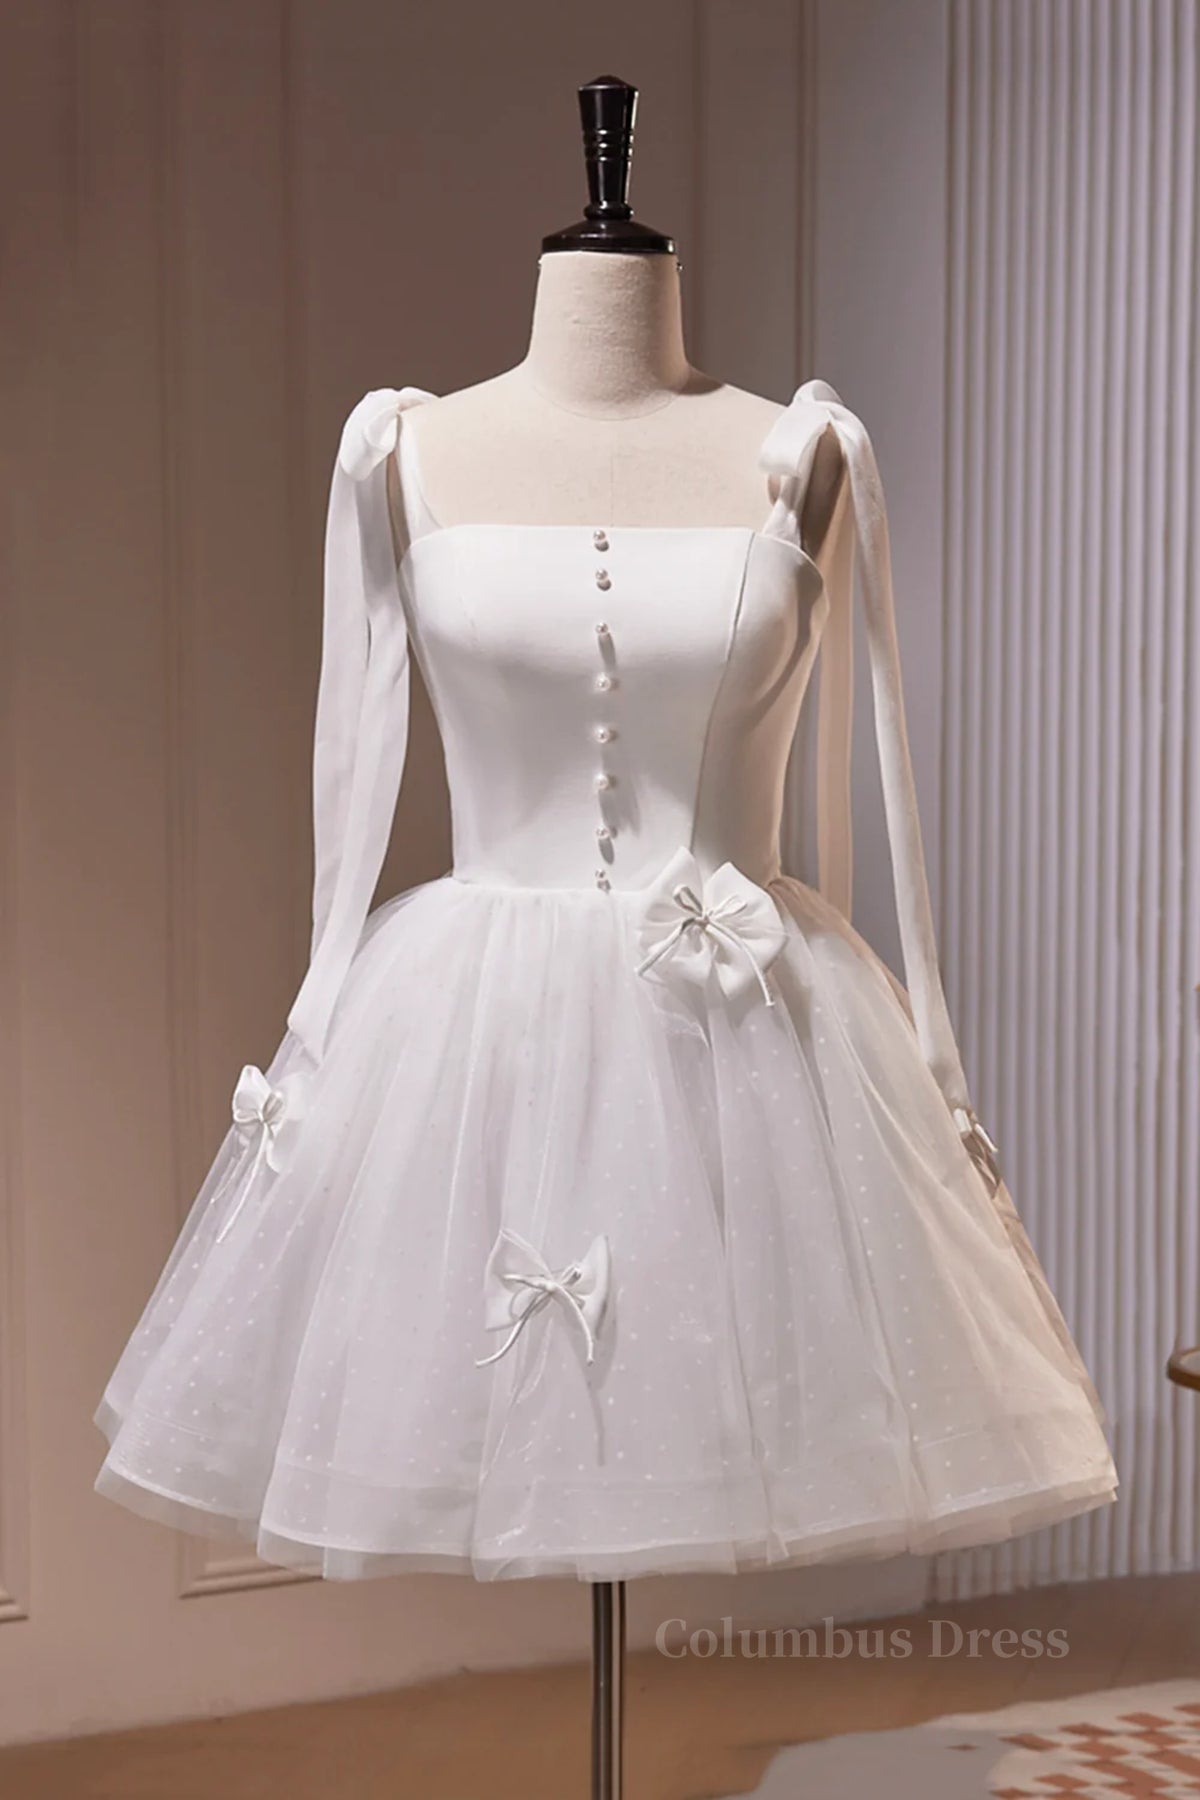 Evening Dress Ideas, Short White Prom Dresses, Short White Formal Homecoming Dresses